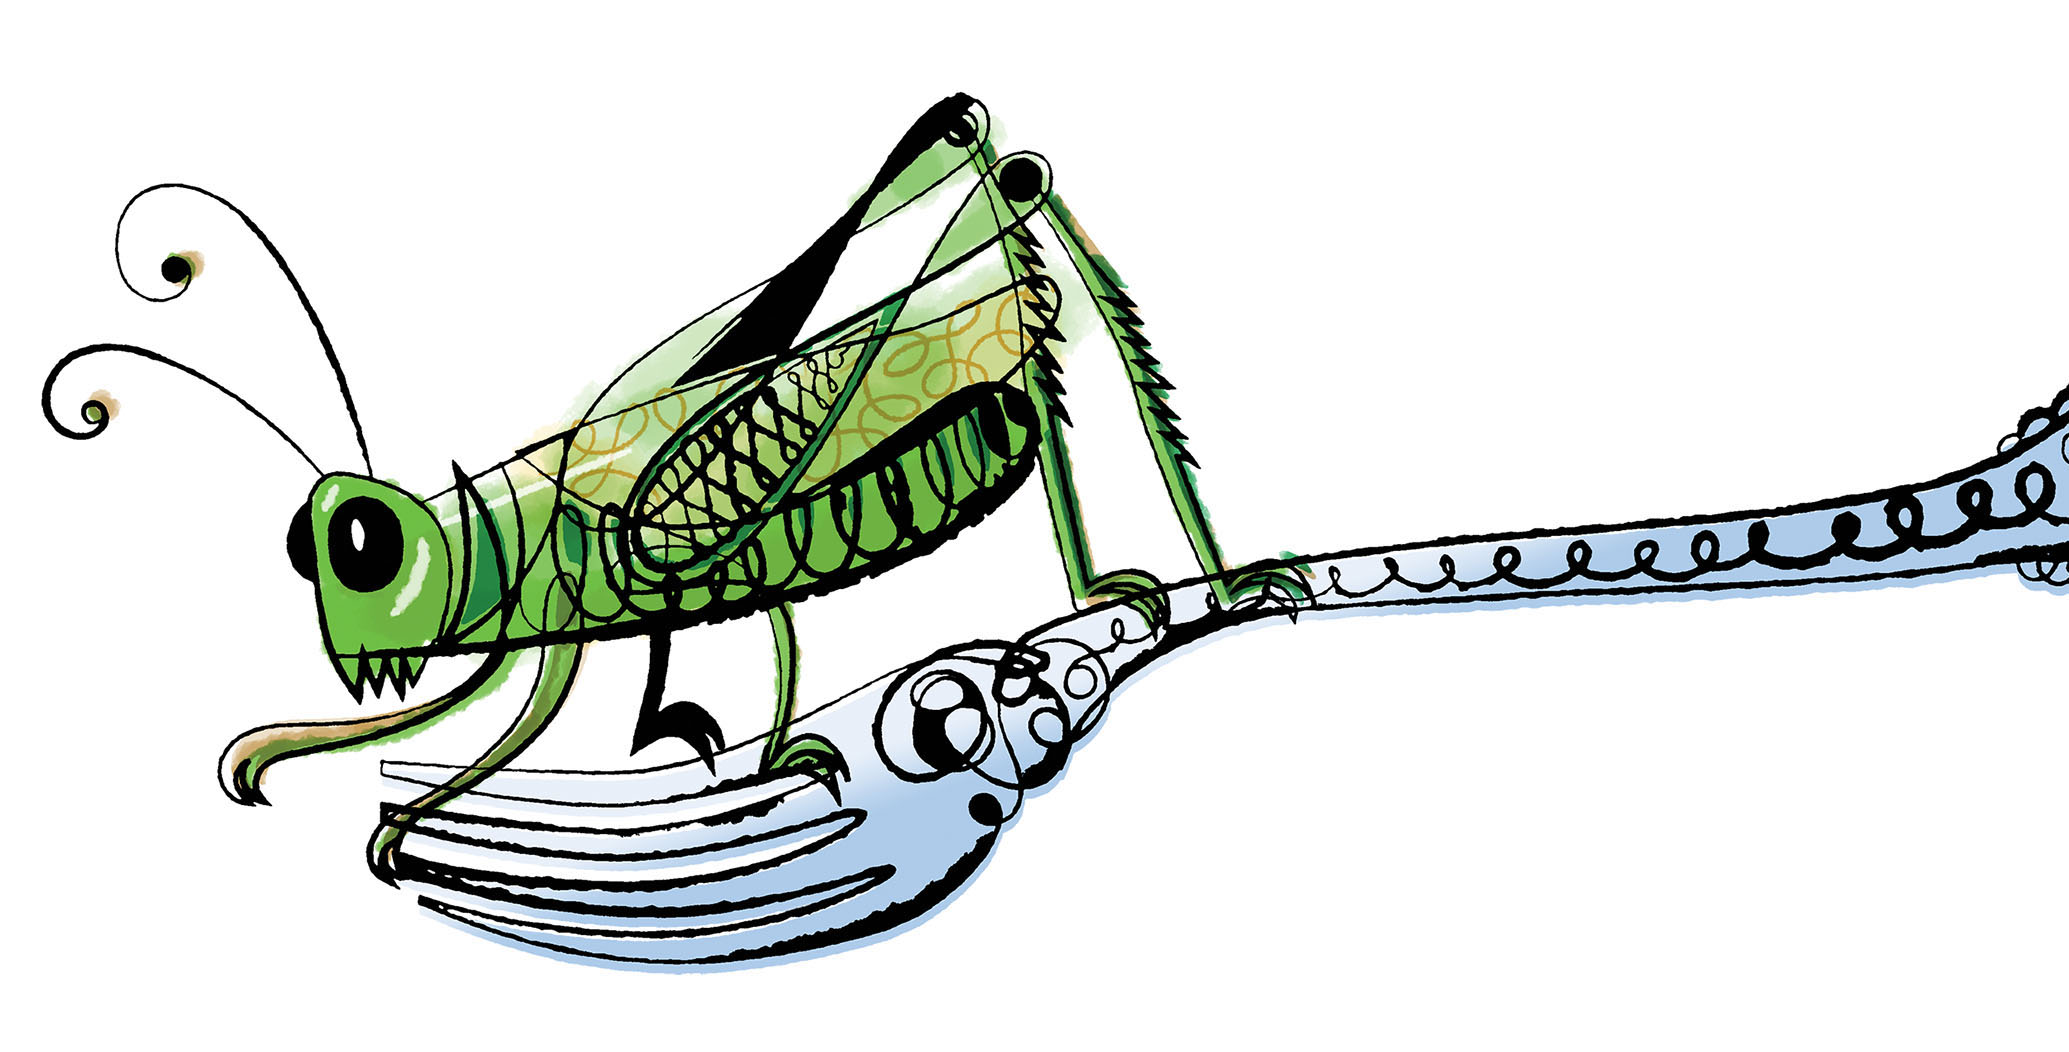 An illustration of a bright green grasshopper